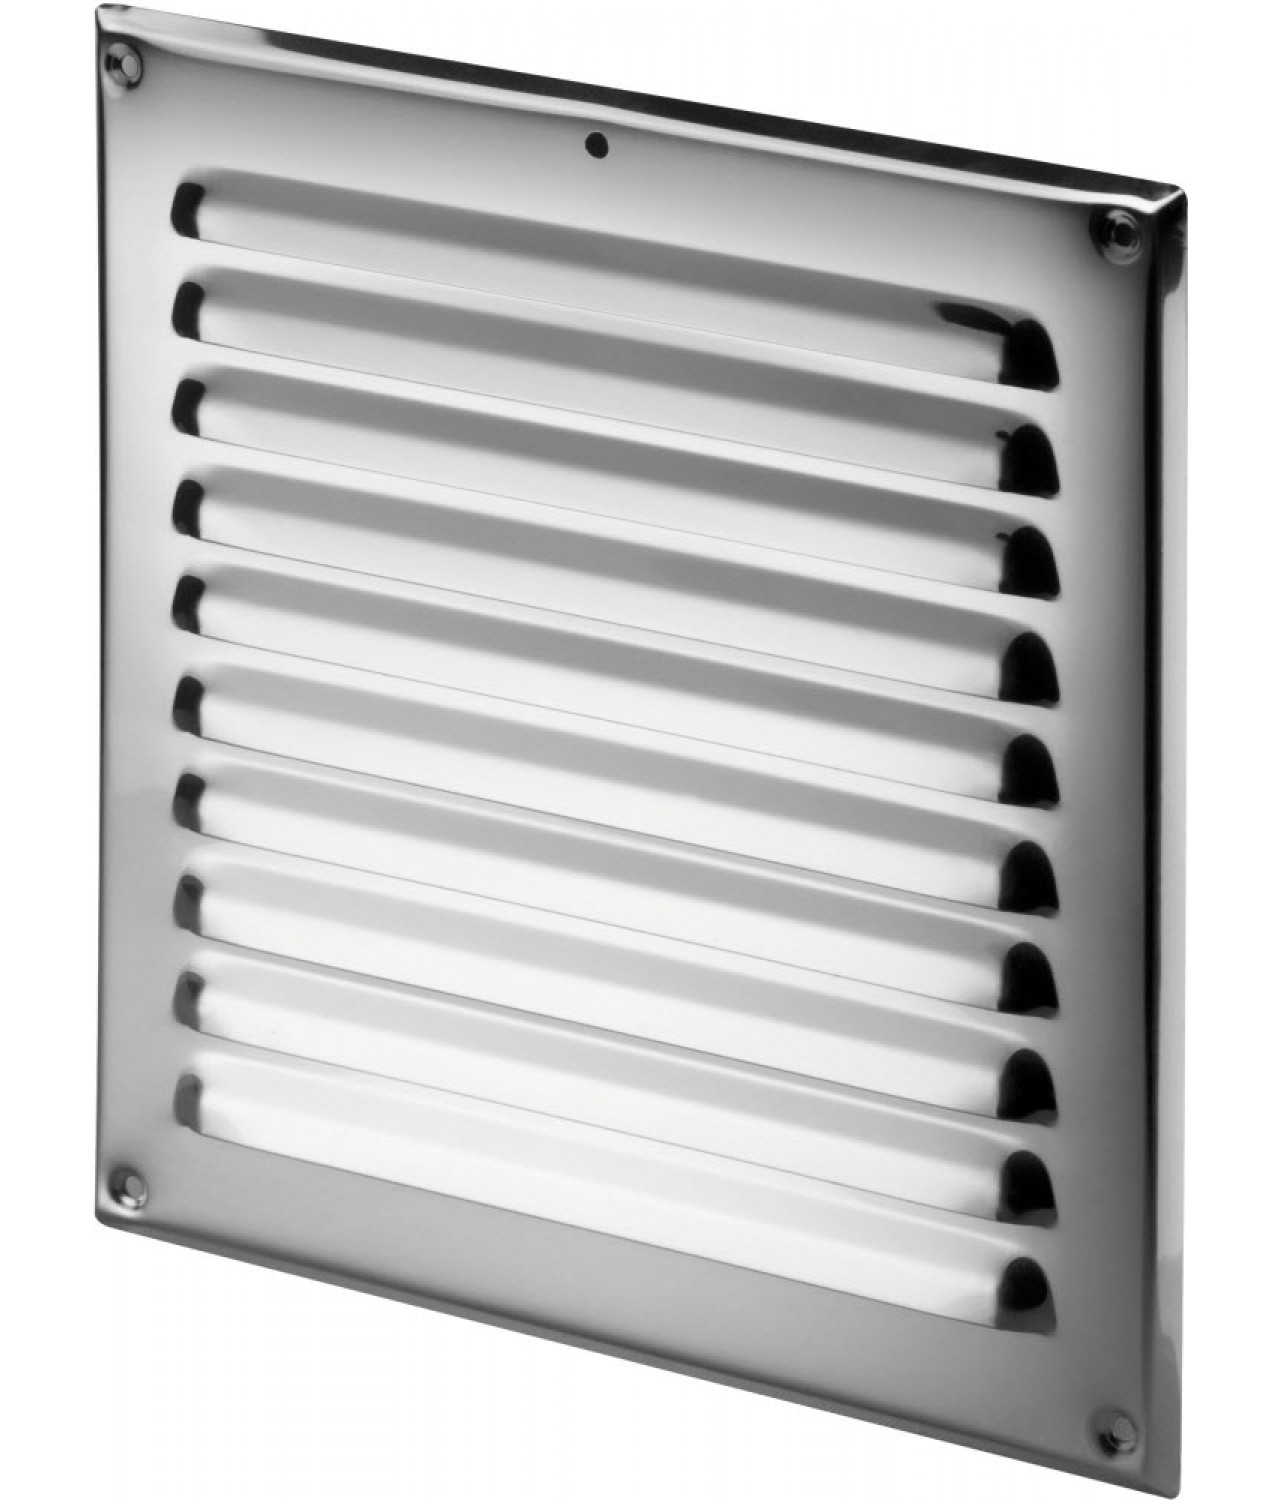 Stainless steel ventilation grille META8N 250x250 mm